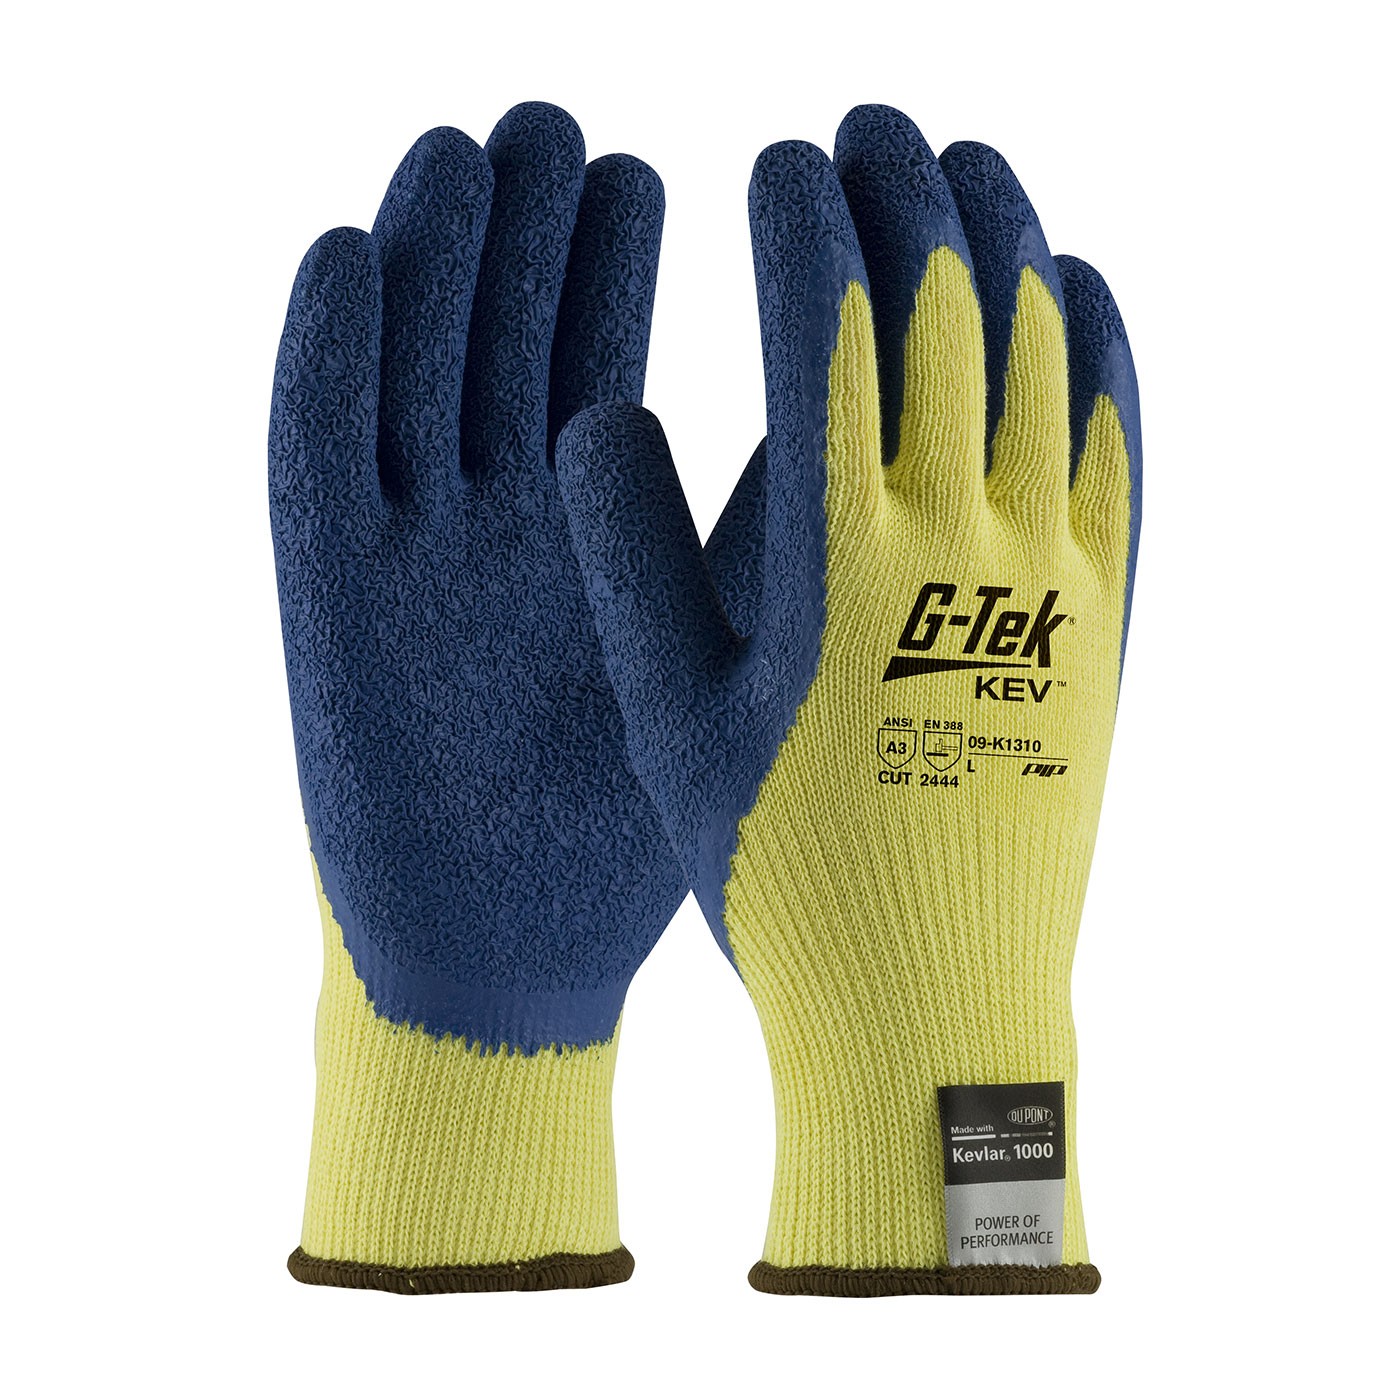 G-Tek® KEV™ Seamless Knit Kevlar® Glove with Latex Coated Crinkle Grip on Palm & Fingers  (#09-K1310)